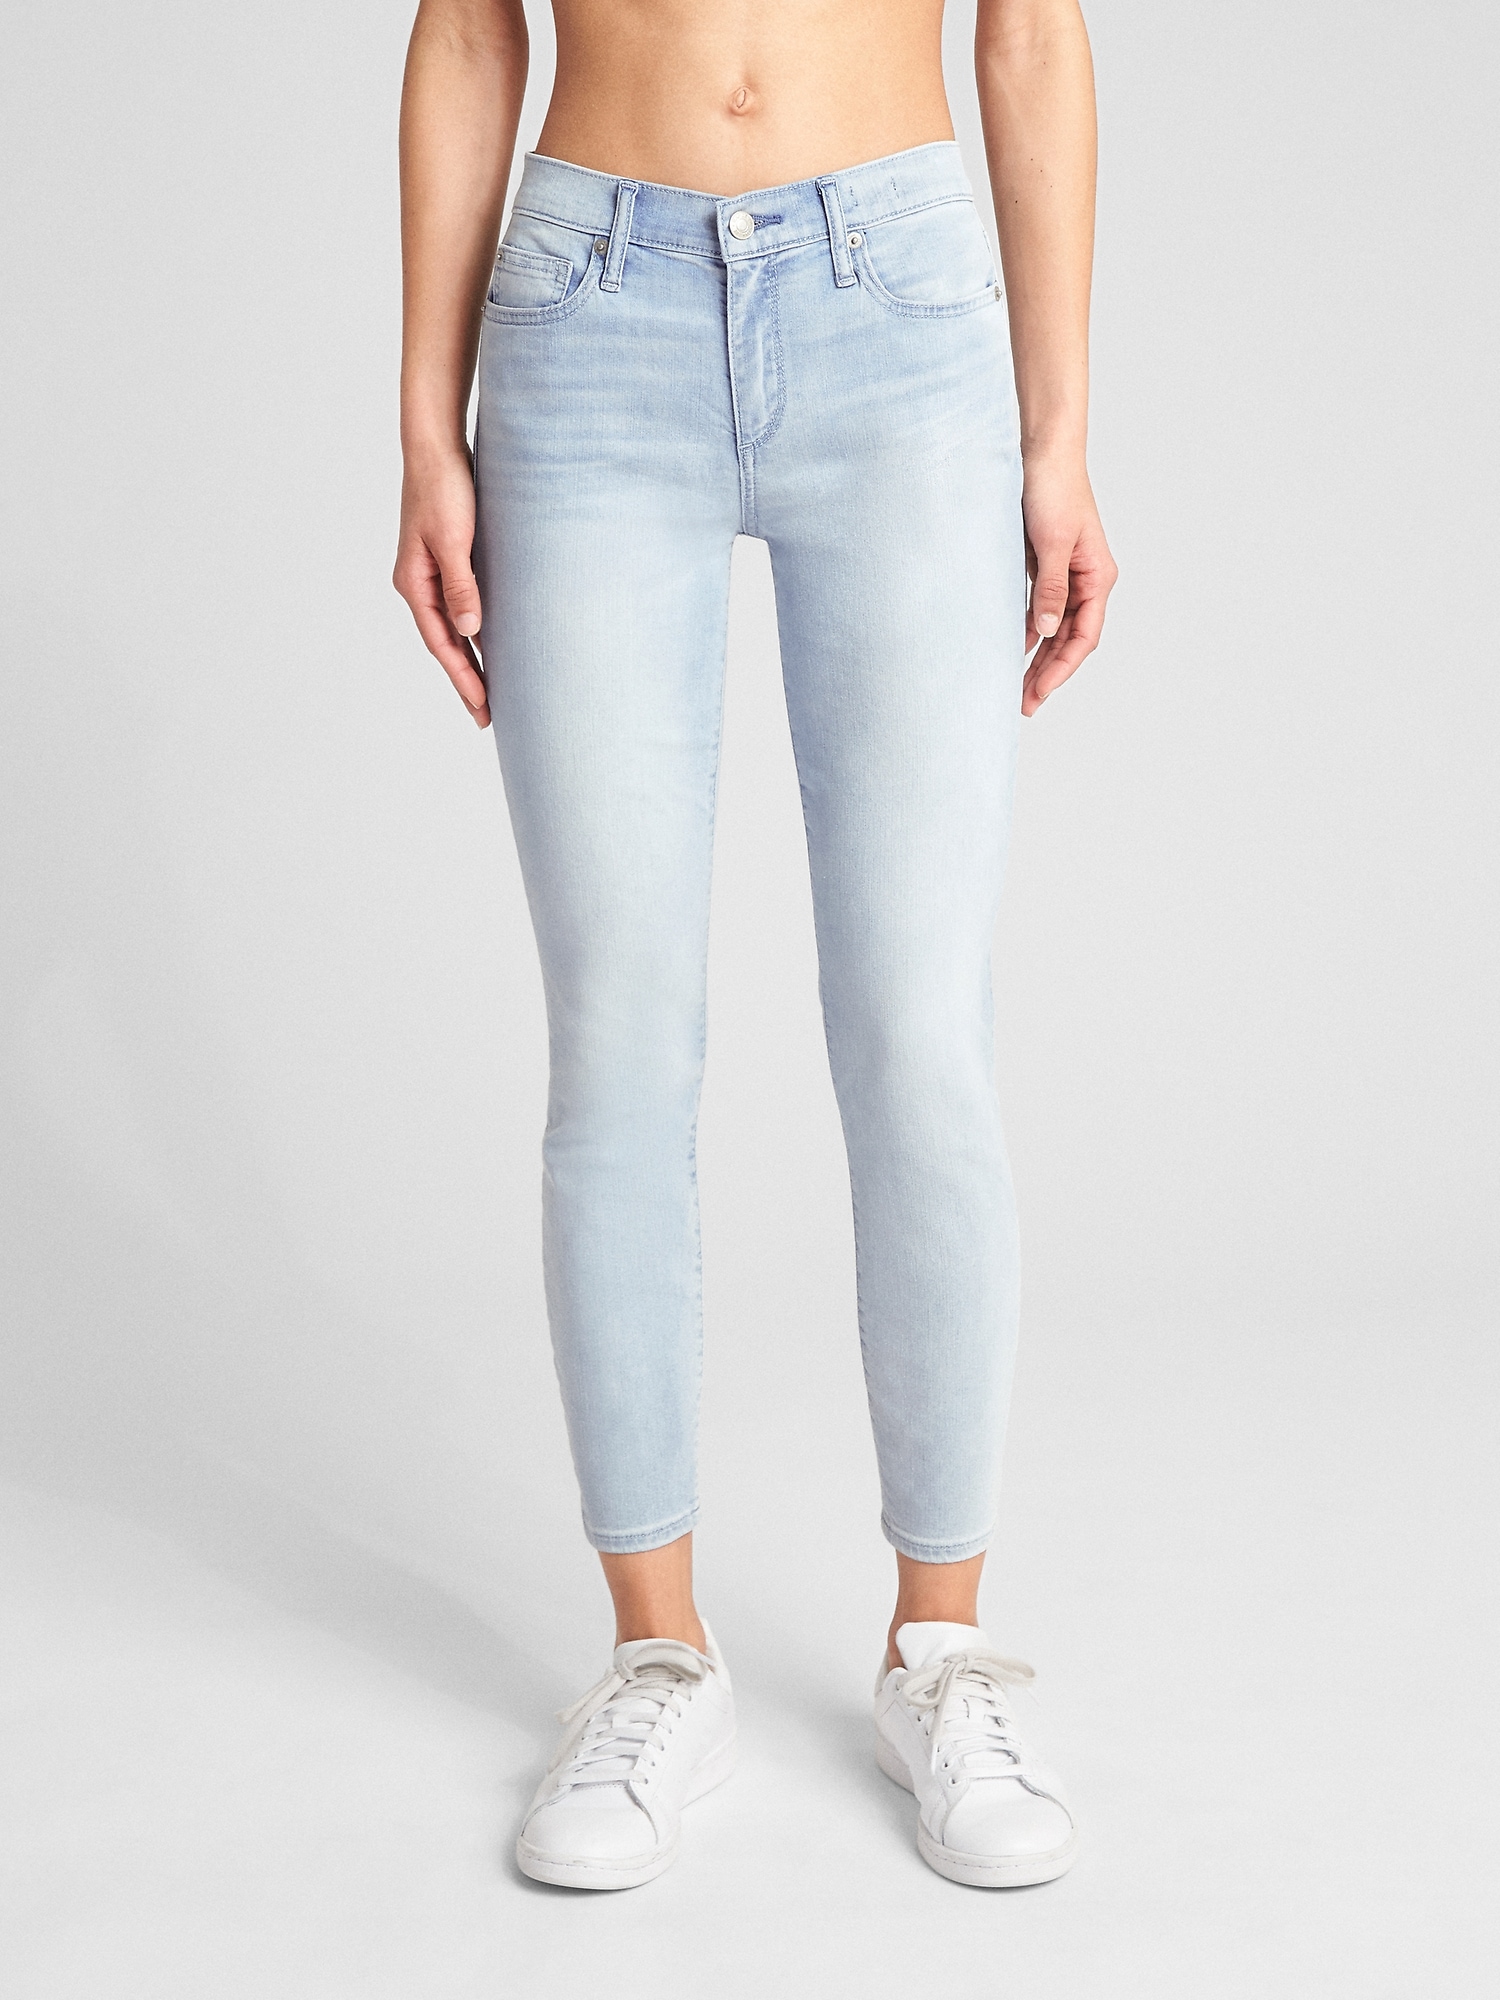 Gap “jegging” jeans - 5 – Fresh Kids Inc.